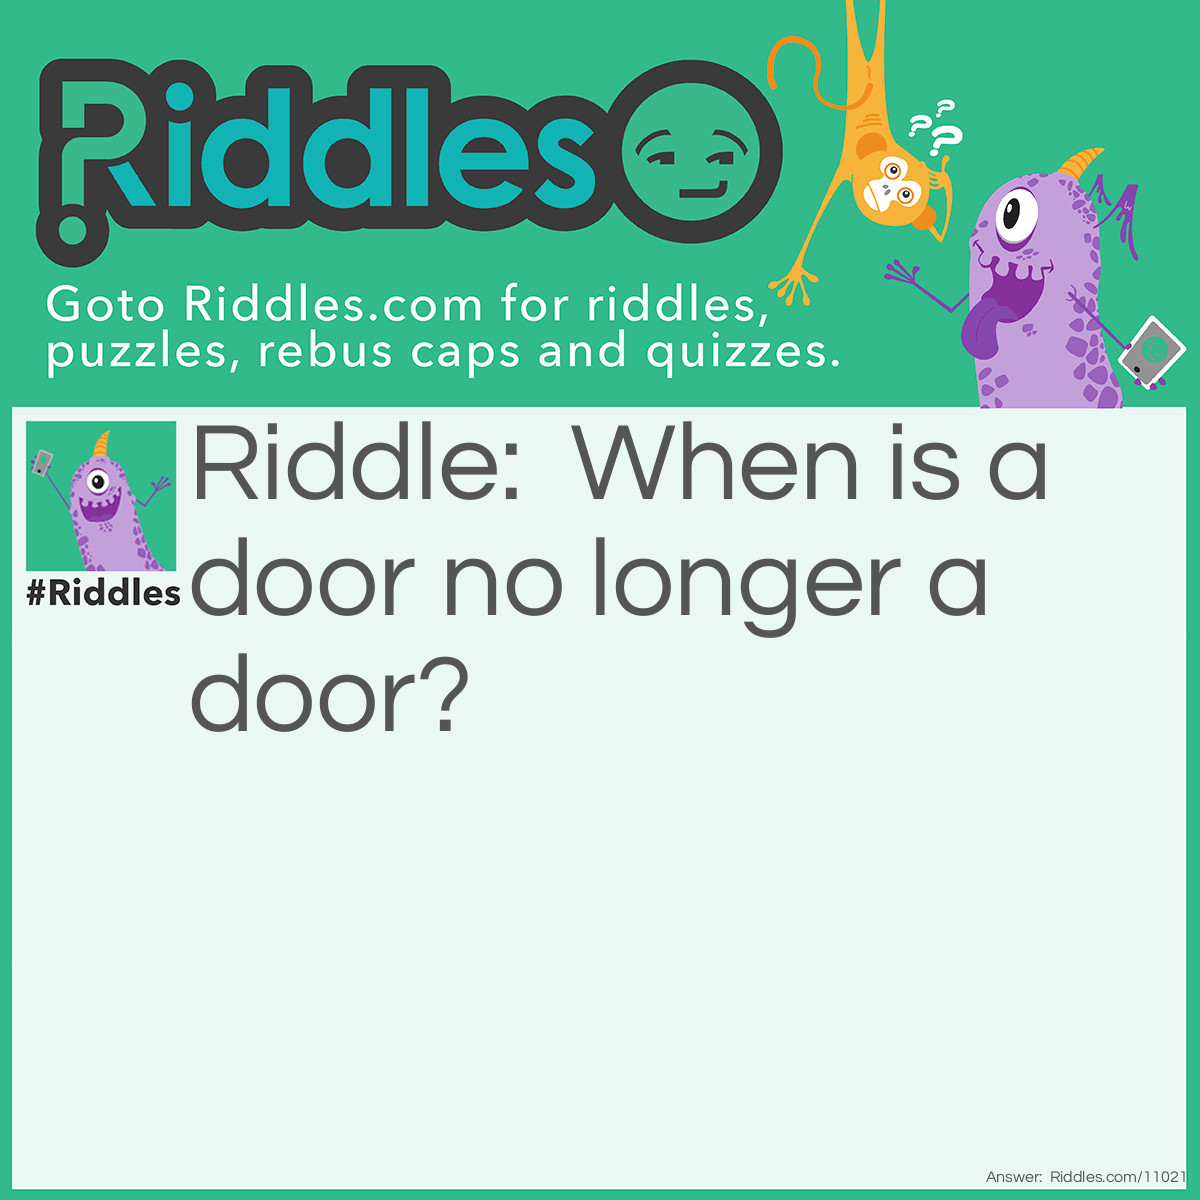 Riddle: When is a door no longer a door? Answer: When it's ajar.